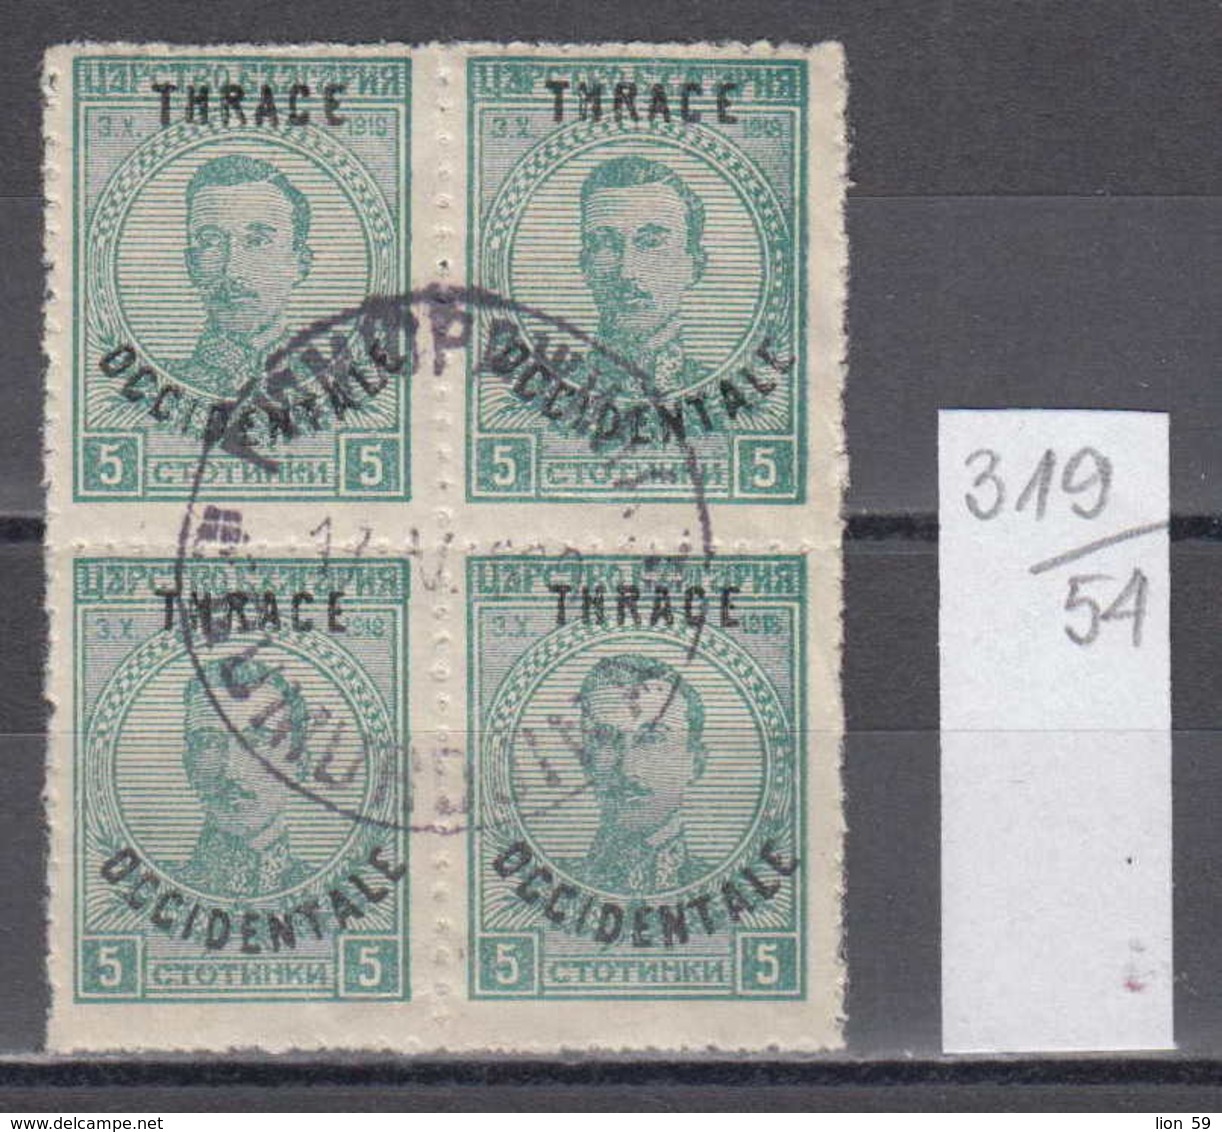 54K319 / Thrace Thrakien Trakia 1920 Michel Nr. 20 Overprint Bulgaria "TRACE OCCIDENTALE" Used GUMURDJINA Greece Grece - Thrace